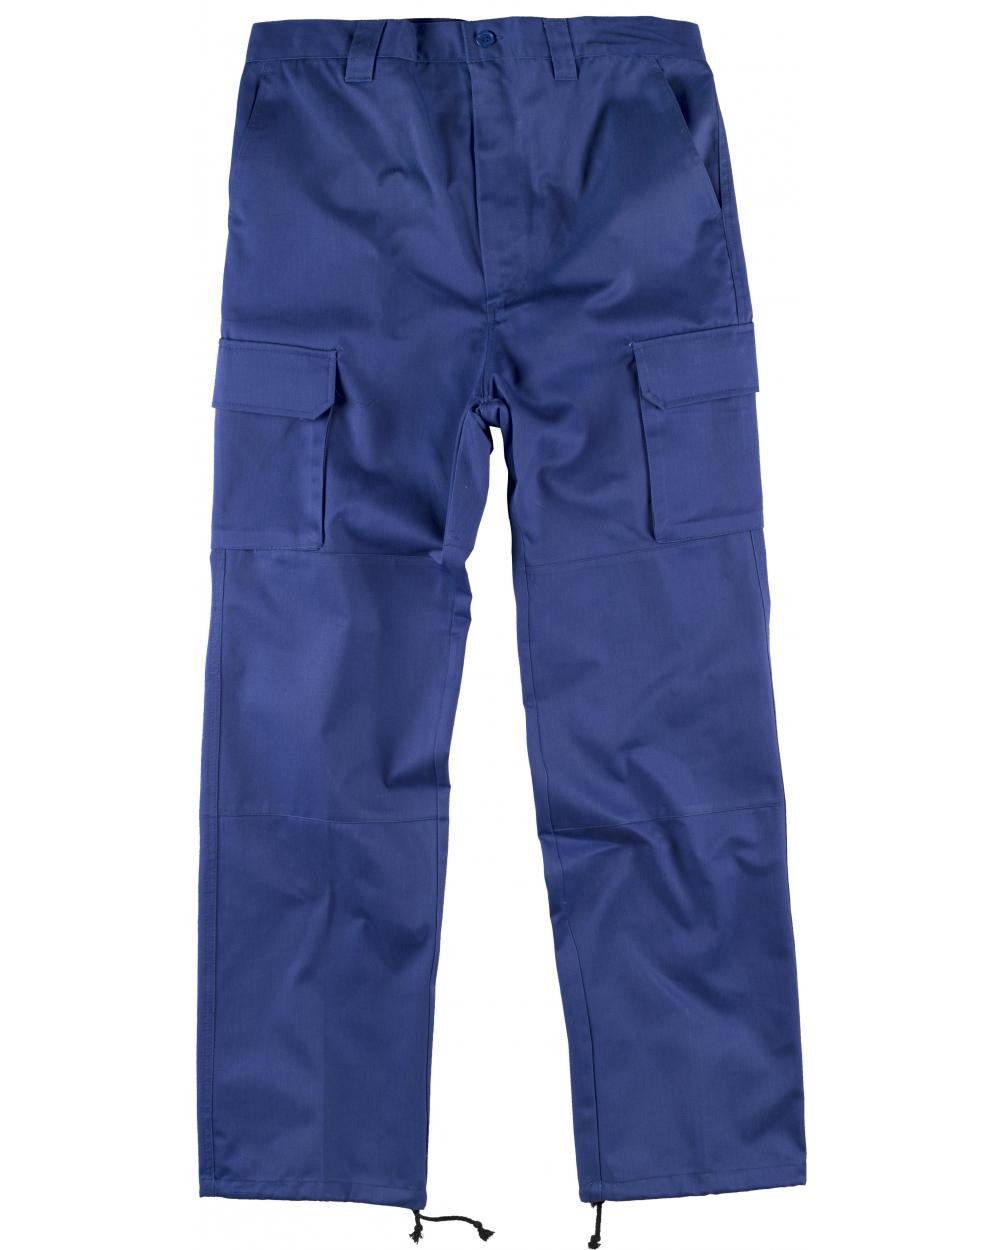 Comprar Pantalon de trabajo con refuerzos B1416 Azulina workteam delante